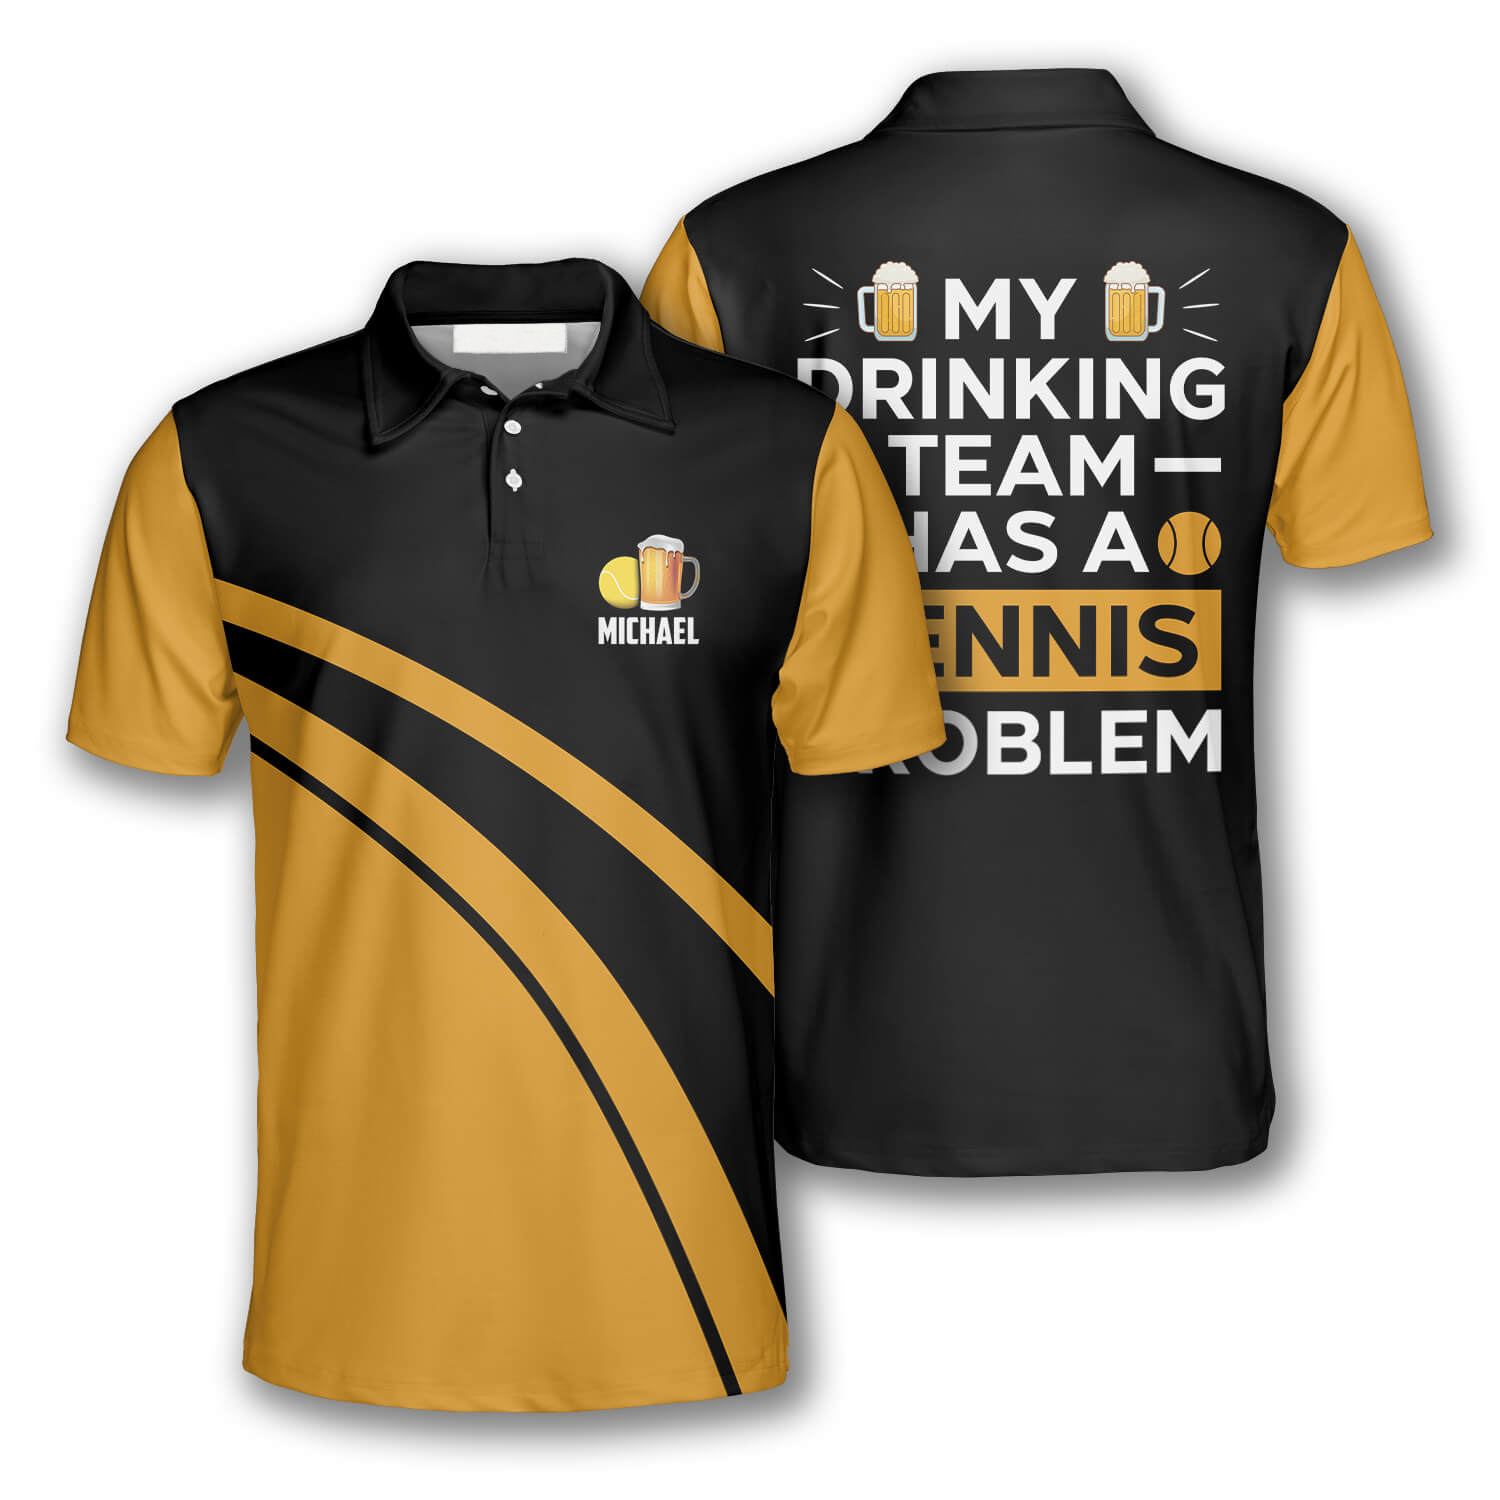 My Drinking Team Has a Tennis Problem Custom Polo Tennis Shirts for Men